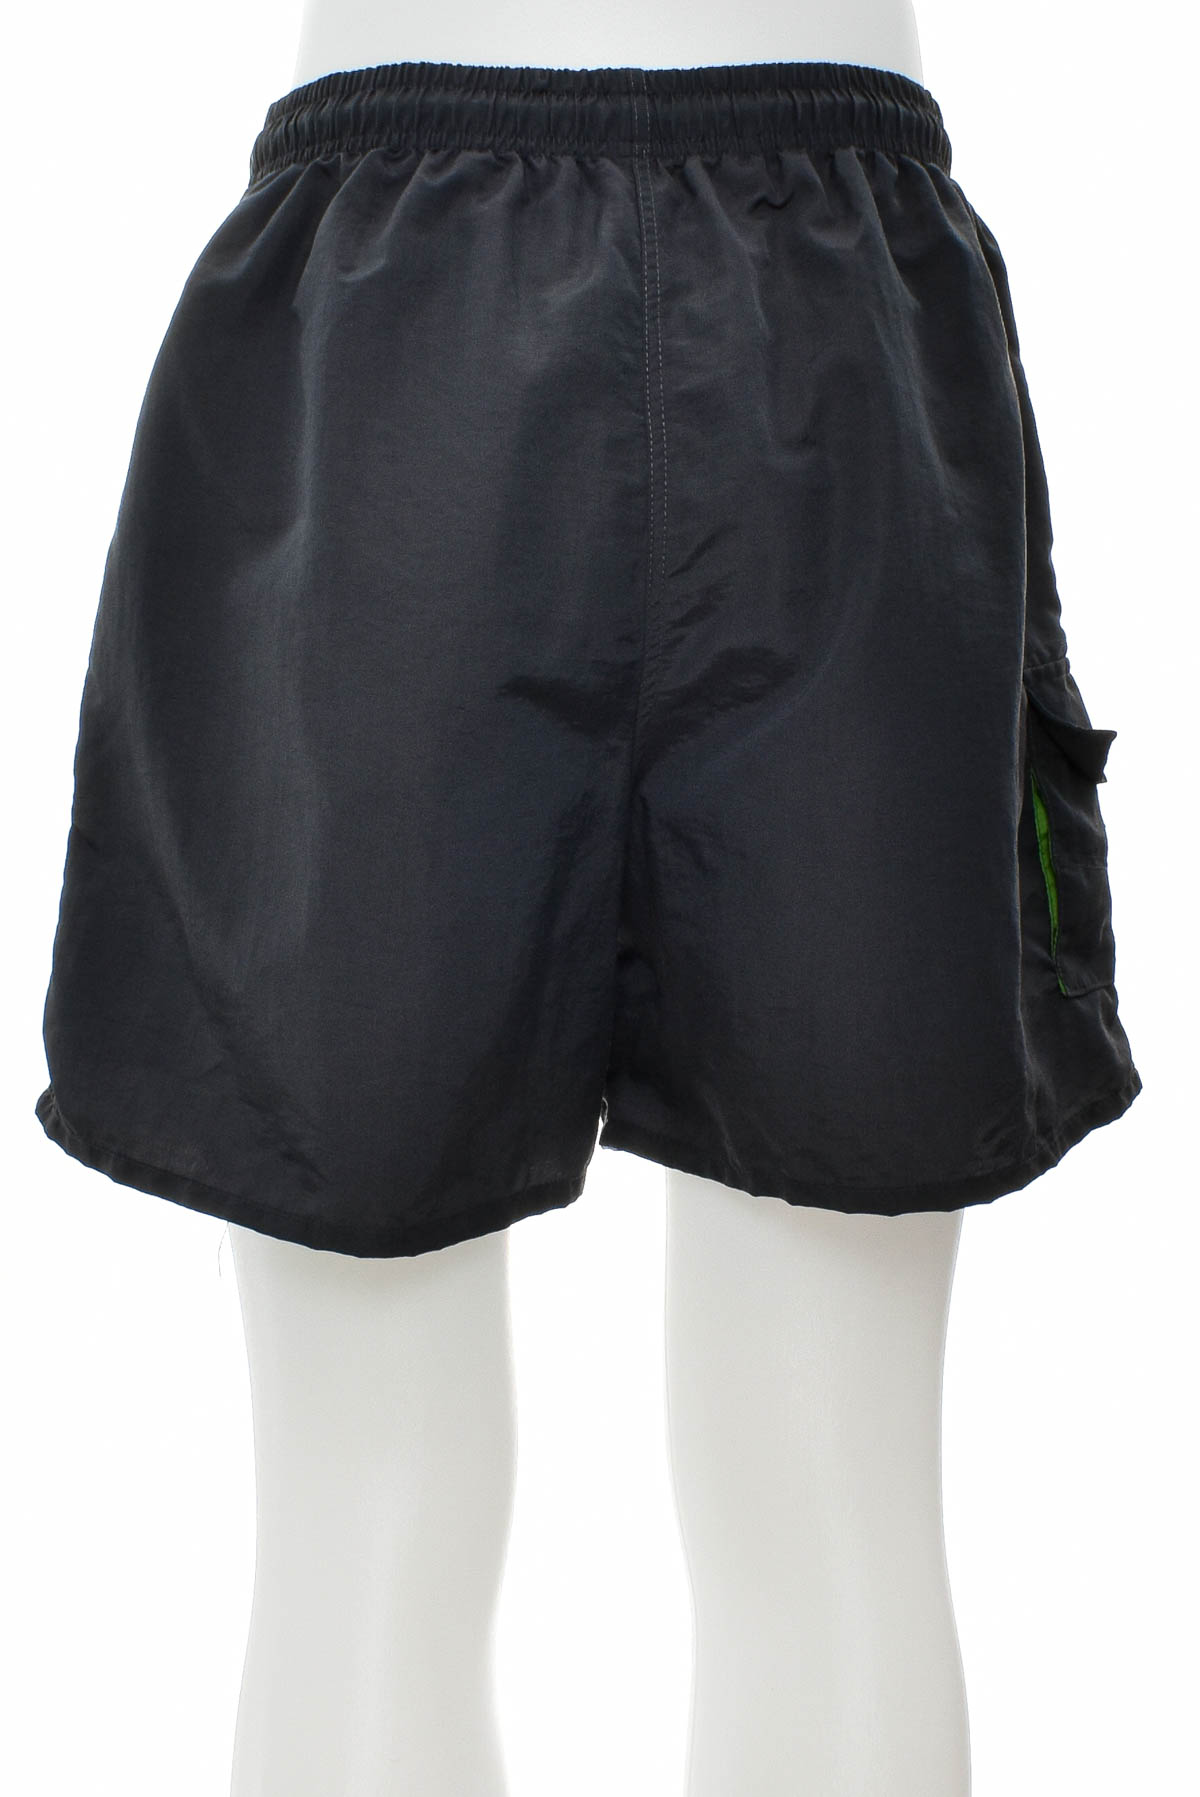 Men's shorts - Aerospin - 1